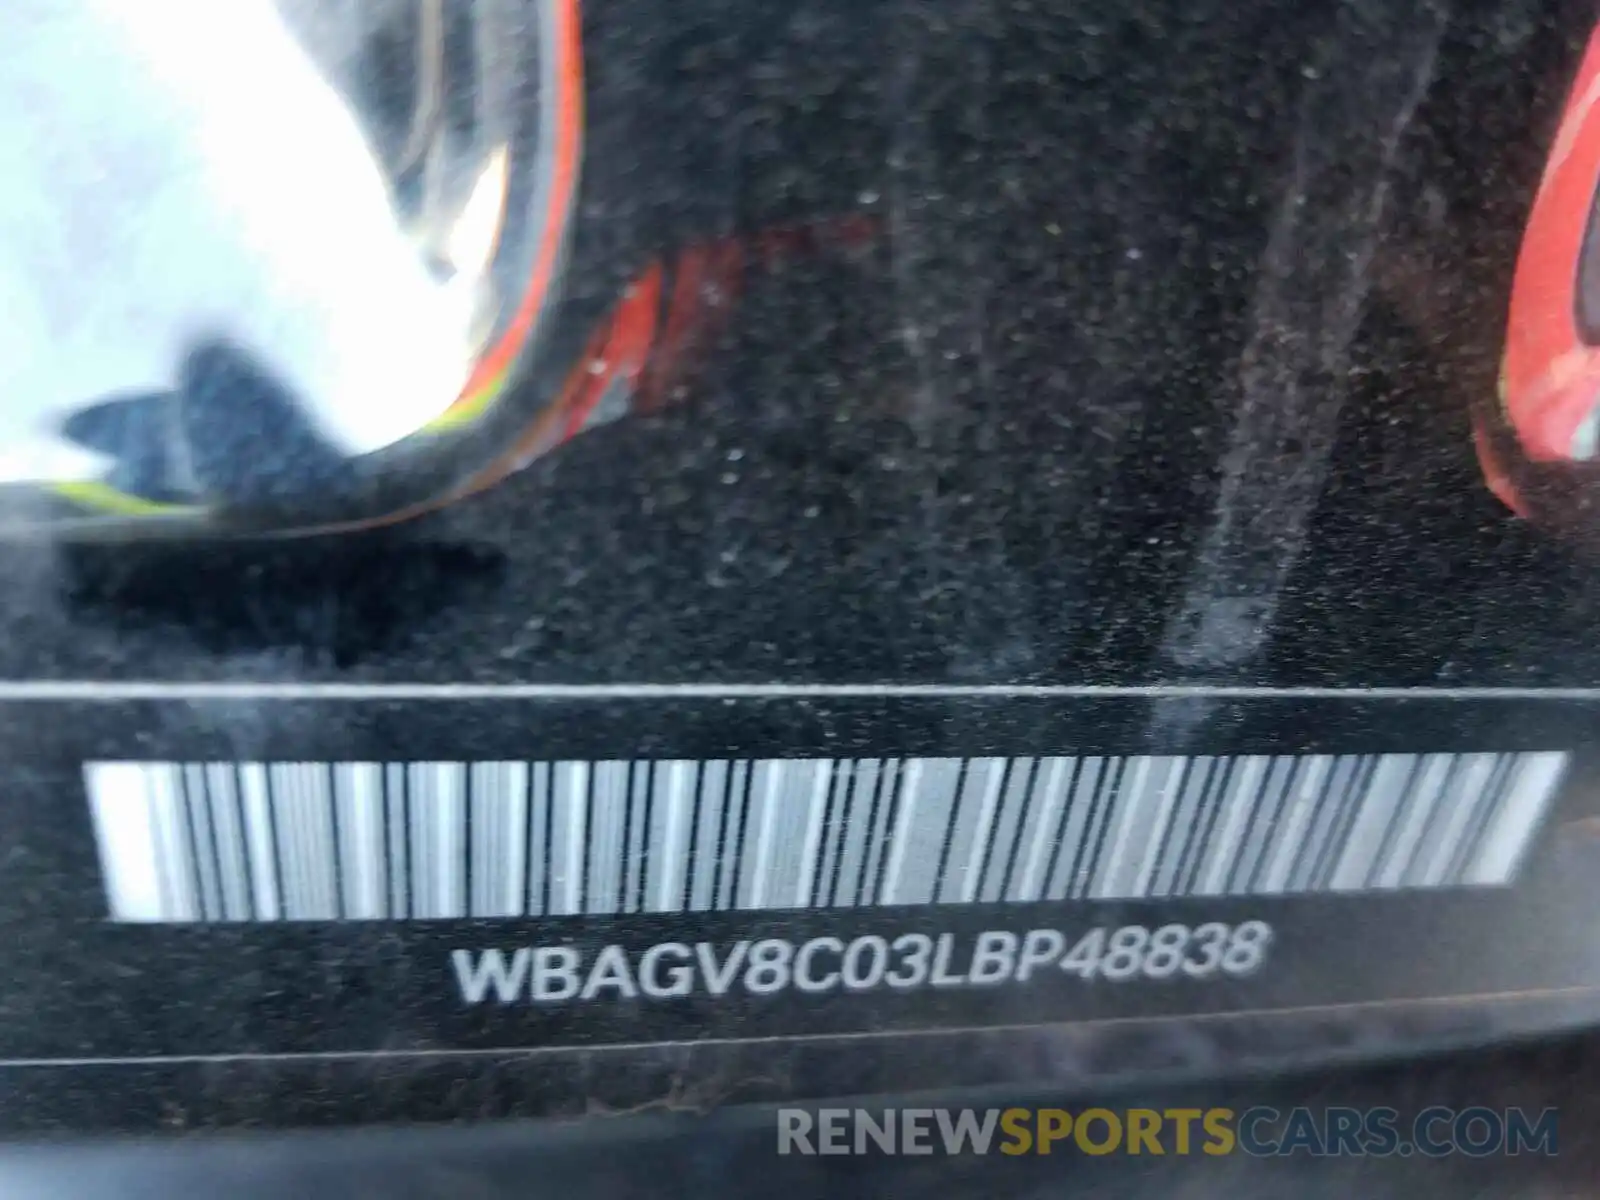 10 Photograph of a damaged car WBAGV8C03LBP48838 BMW M8 2020